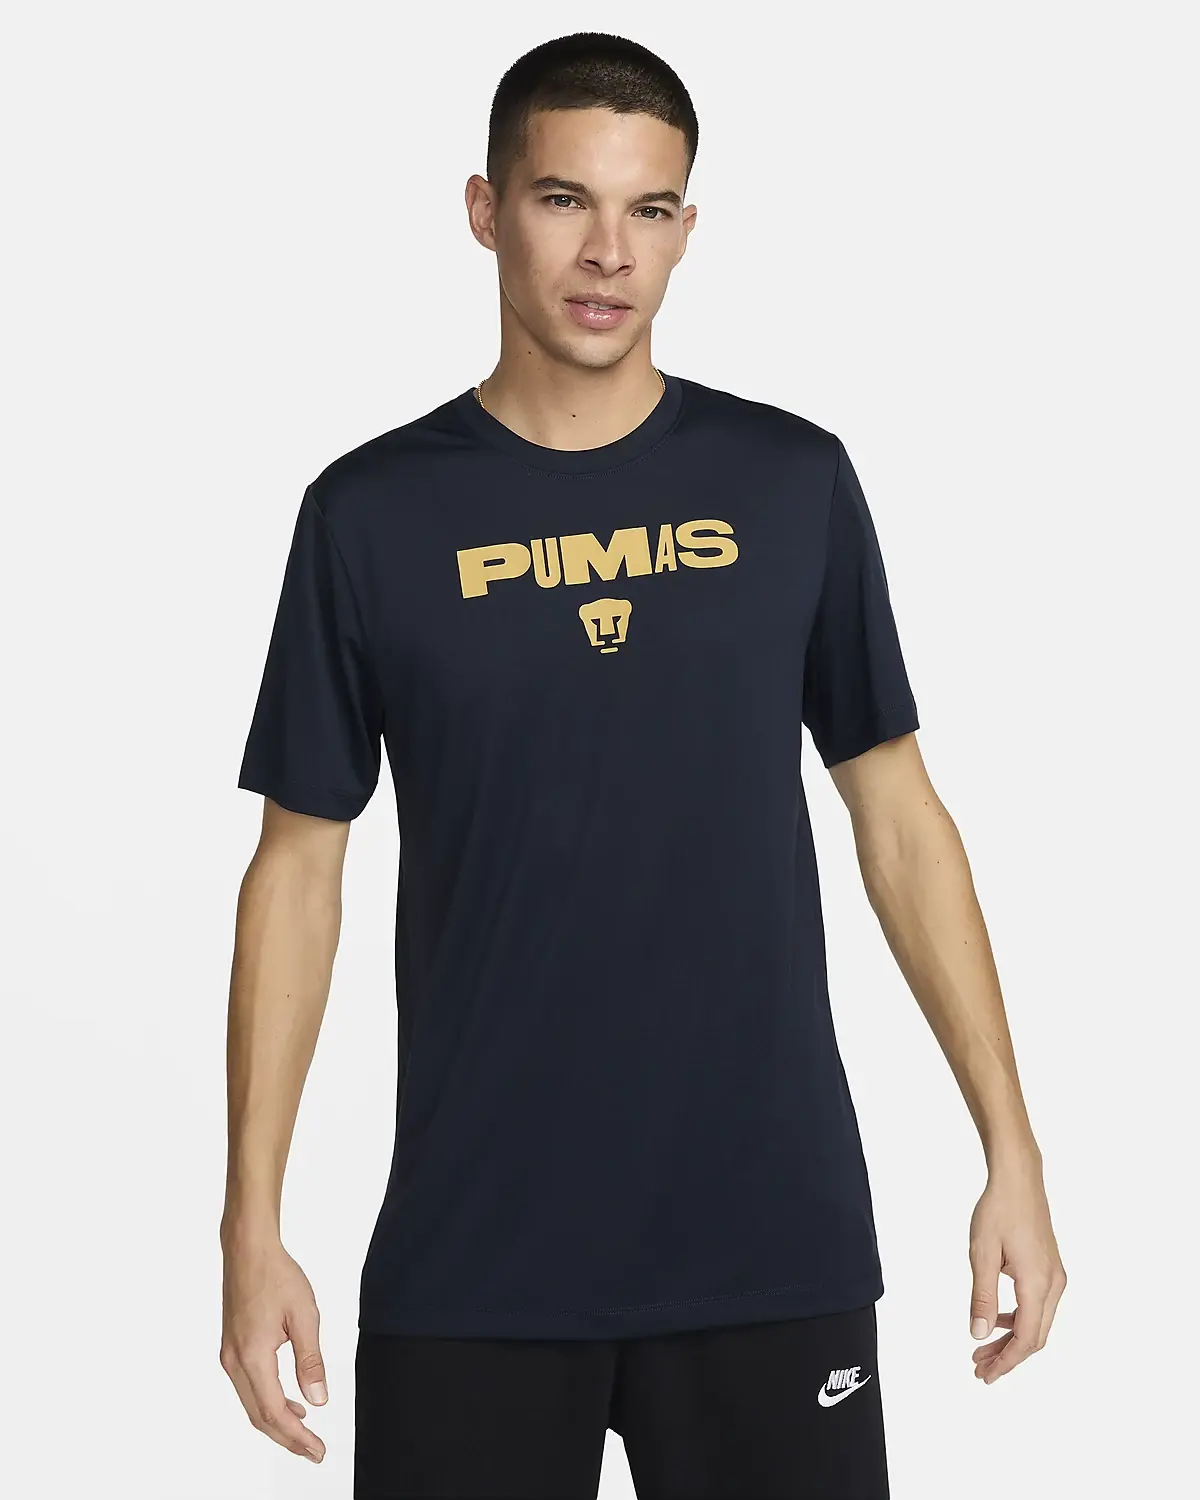 Nike Pumas UNAM. 1